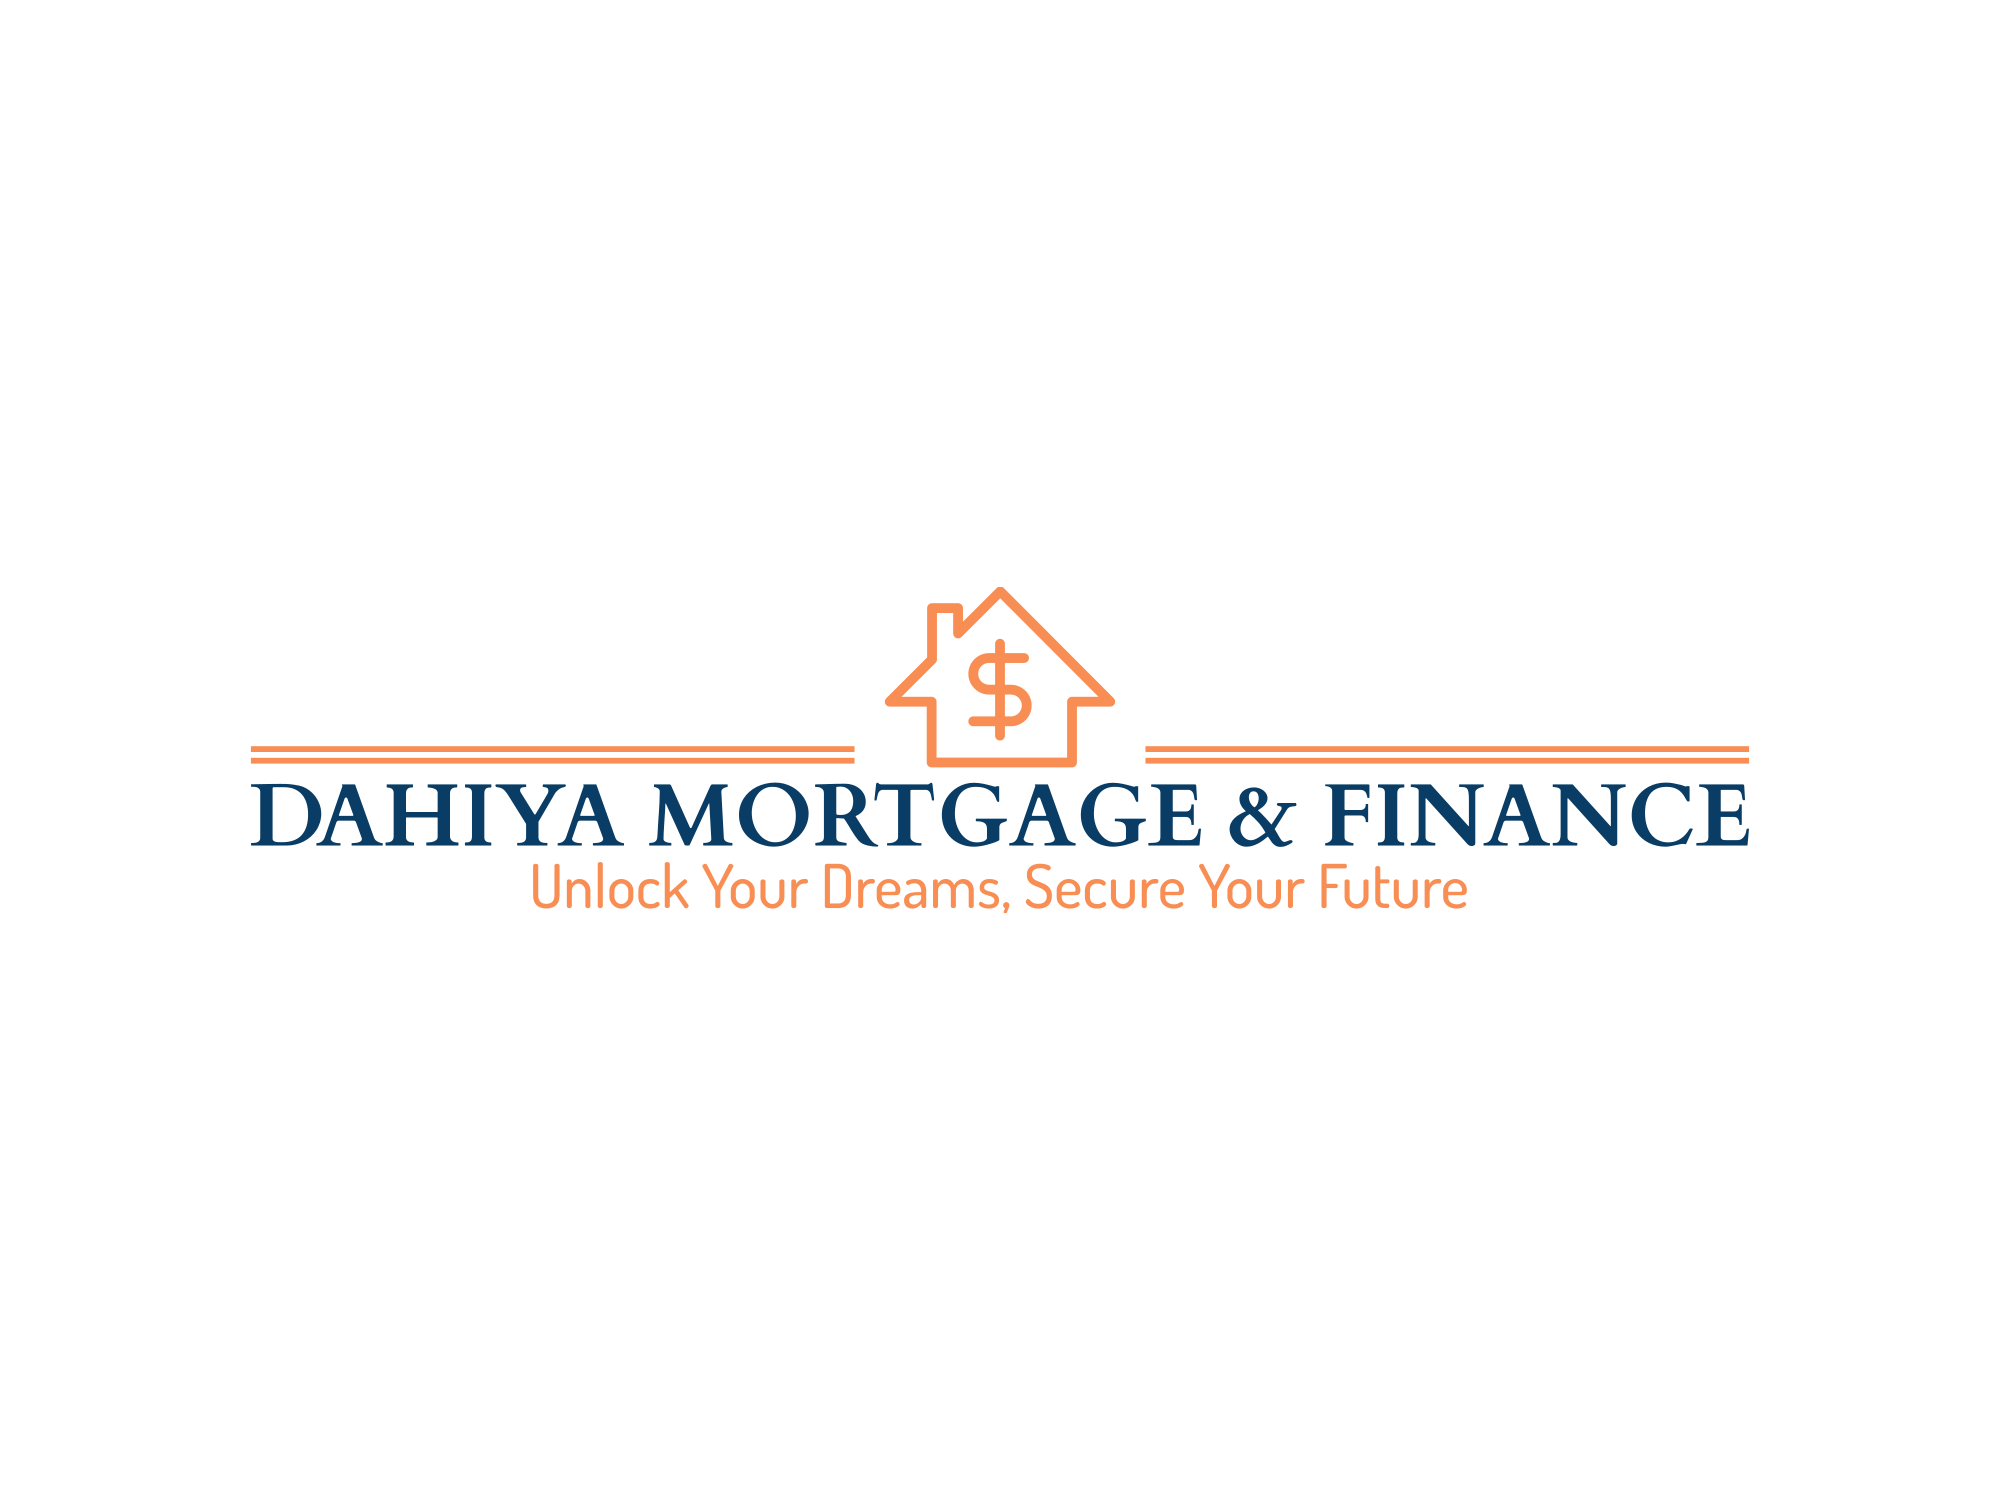 Dahiya Mortgage & Finance Brokers - Lyndhurst, VIC - 0404 129 000 | ShowMeLocal.com